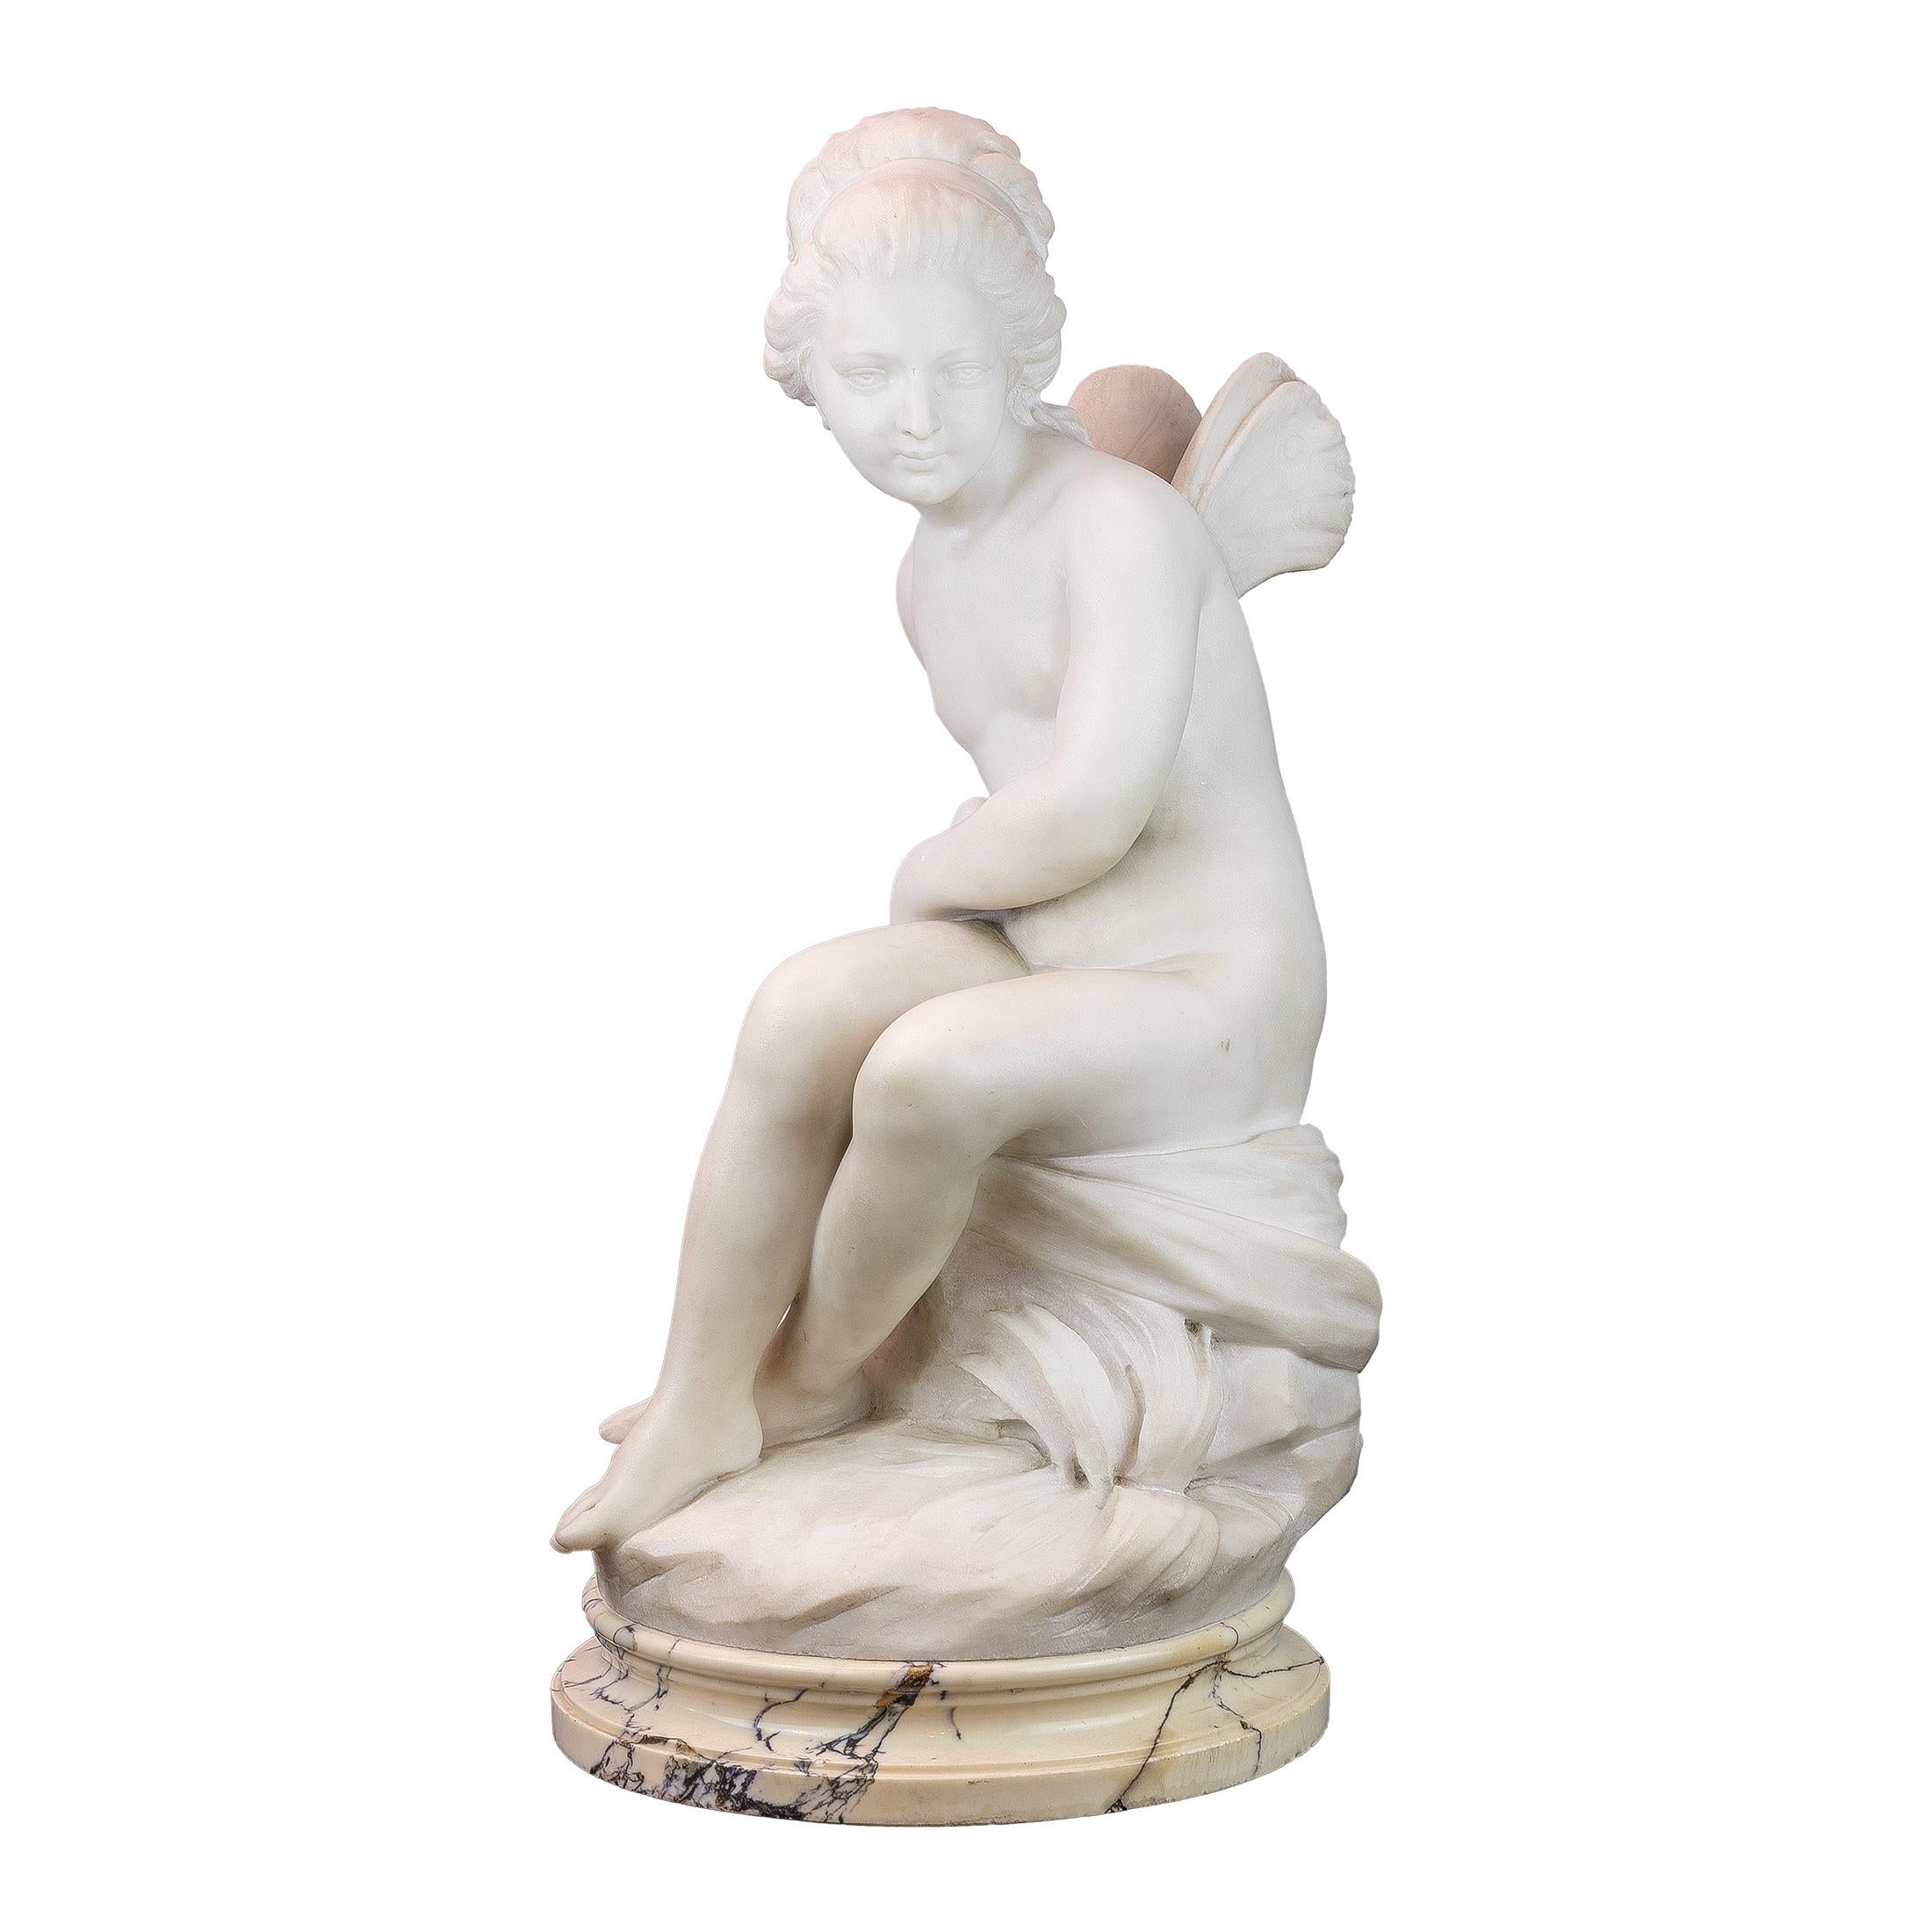 E. DeCori (19th C.) Figurative Sculpture - Marble Sculpture Statue of a Winged Nymph